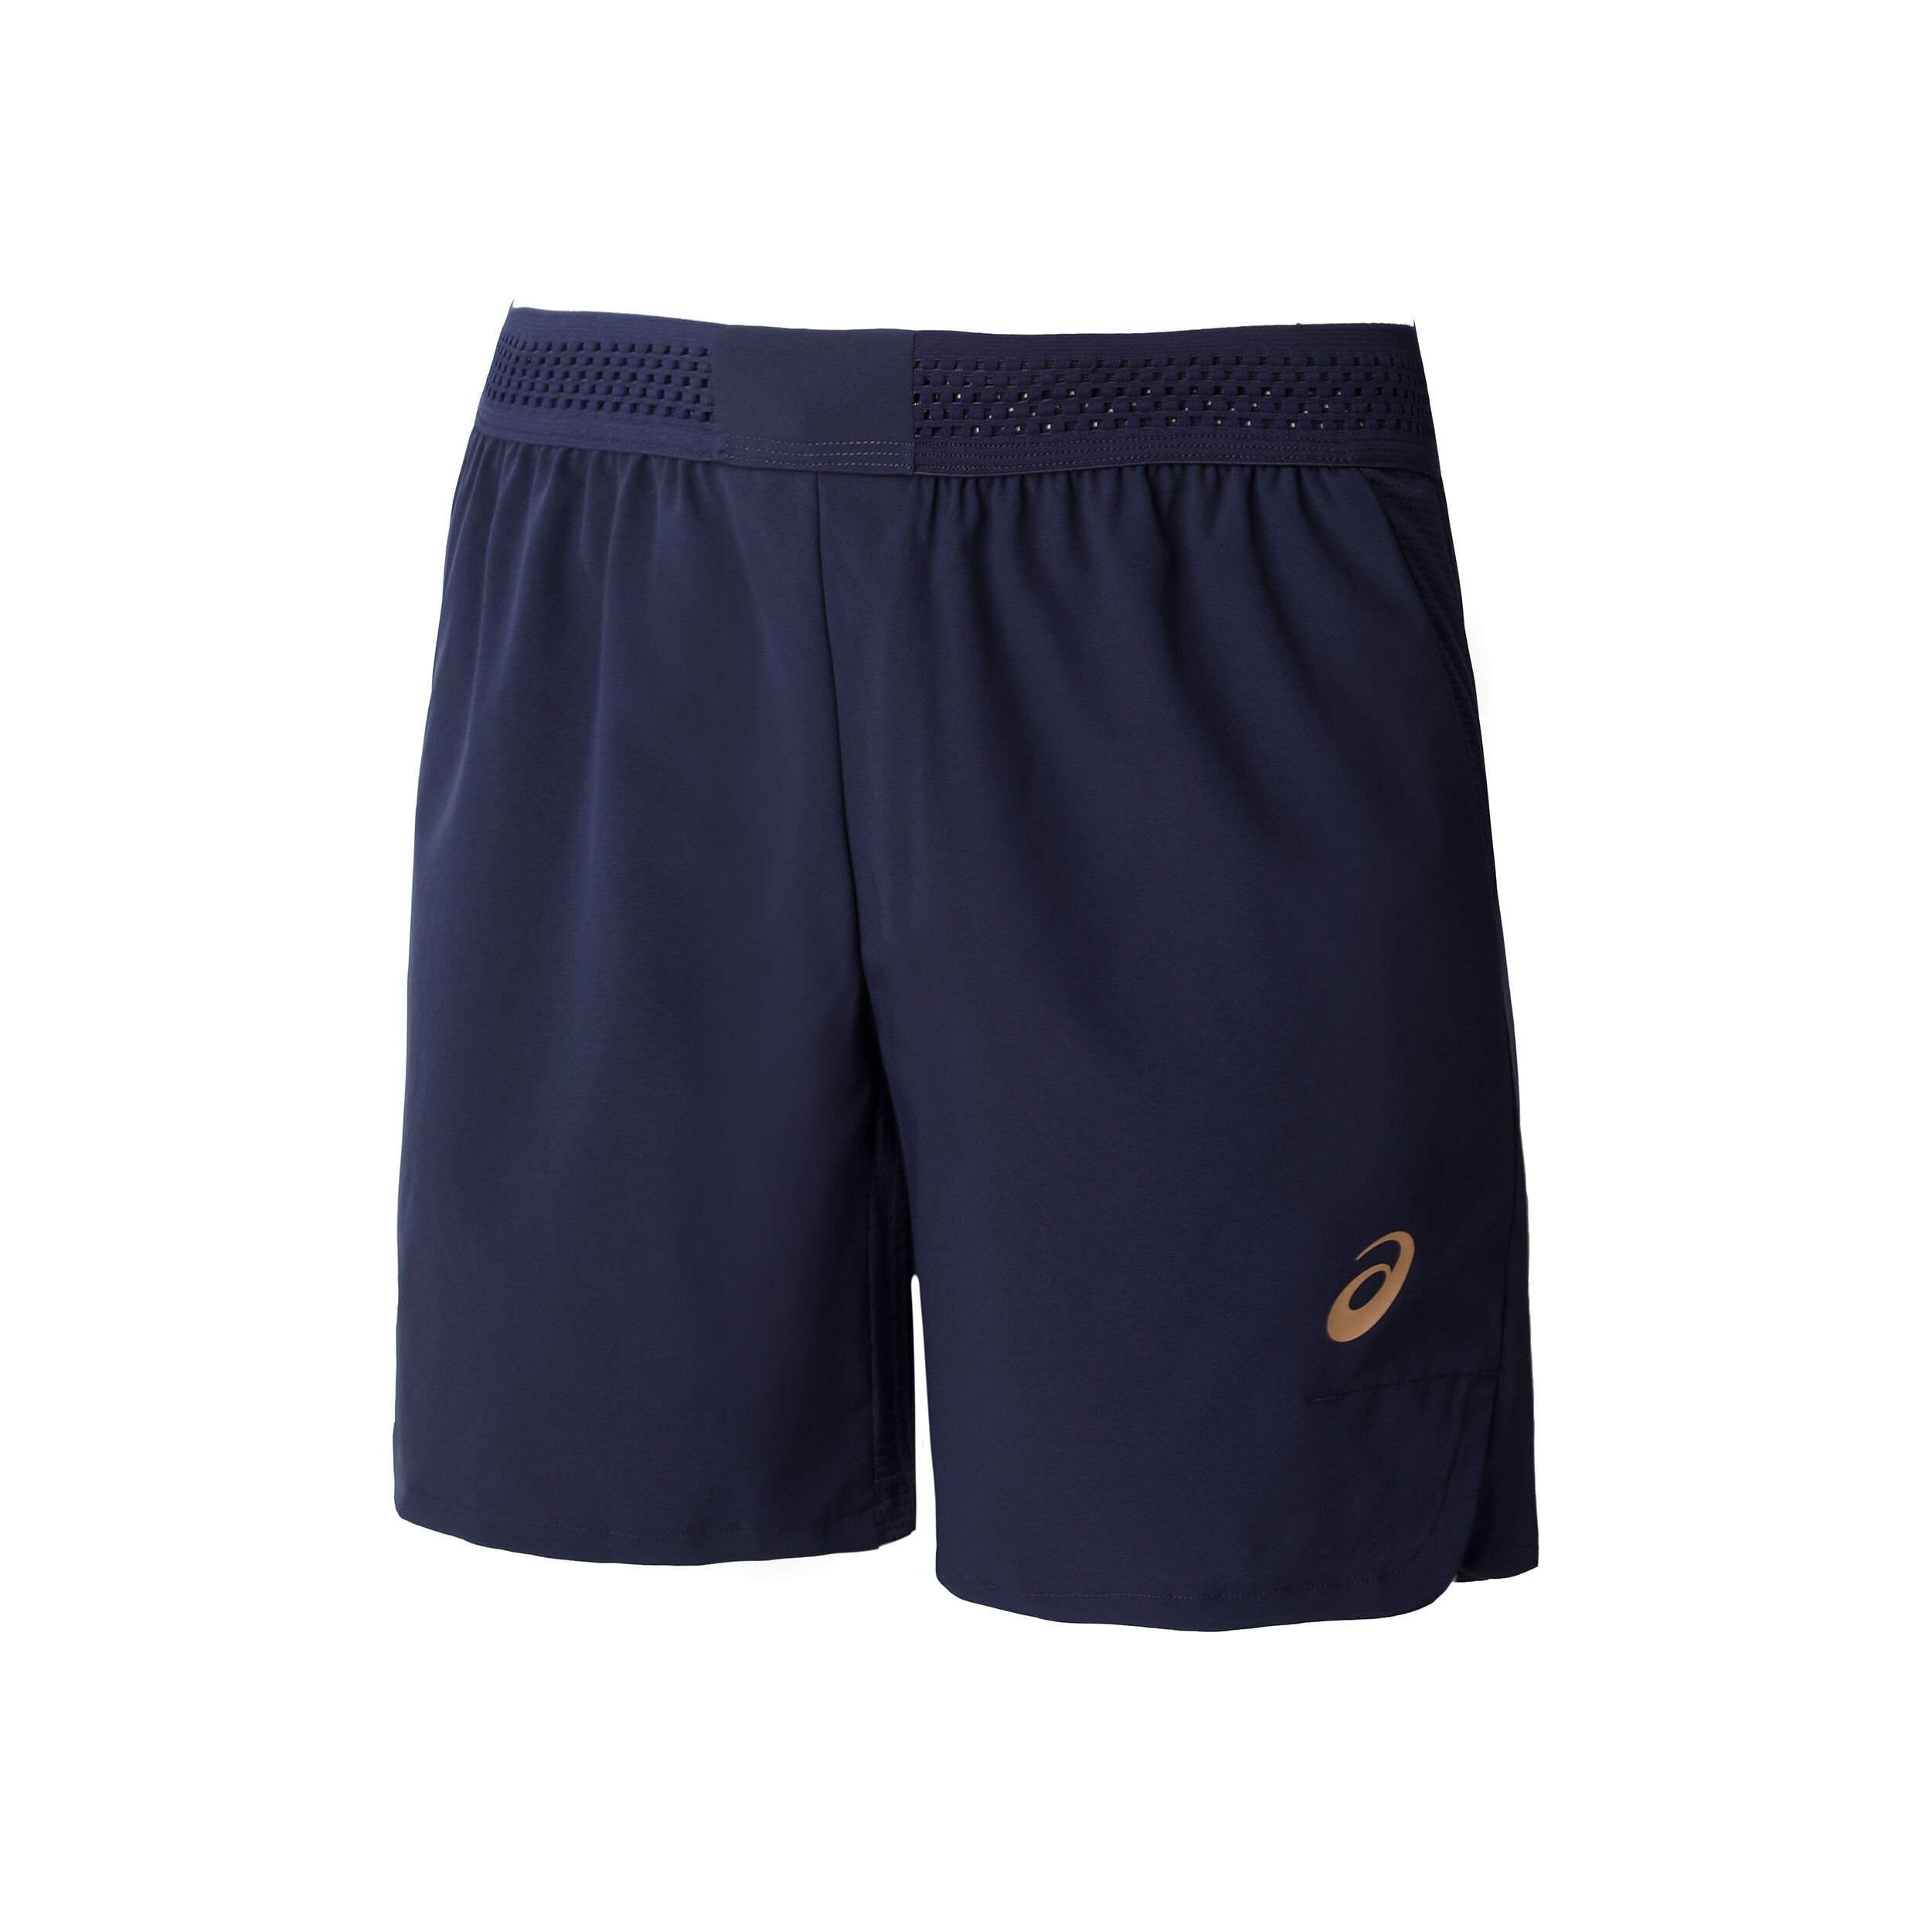 Asics 7in Pantaloncini Uomini - Blu Scuro, Oro compra online | Tennis-Point